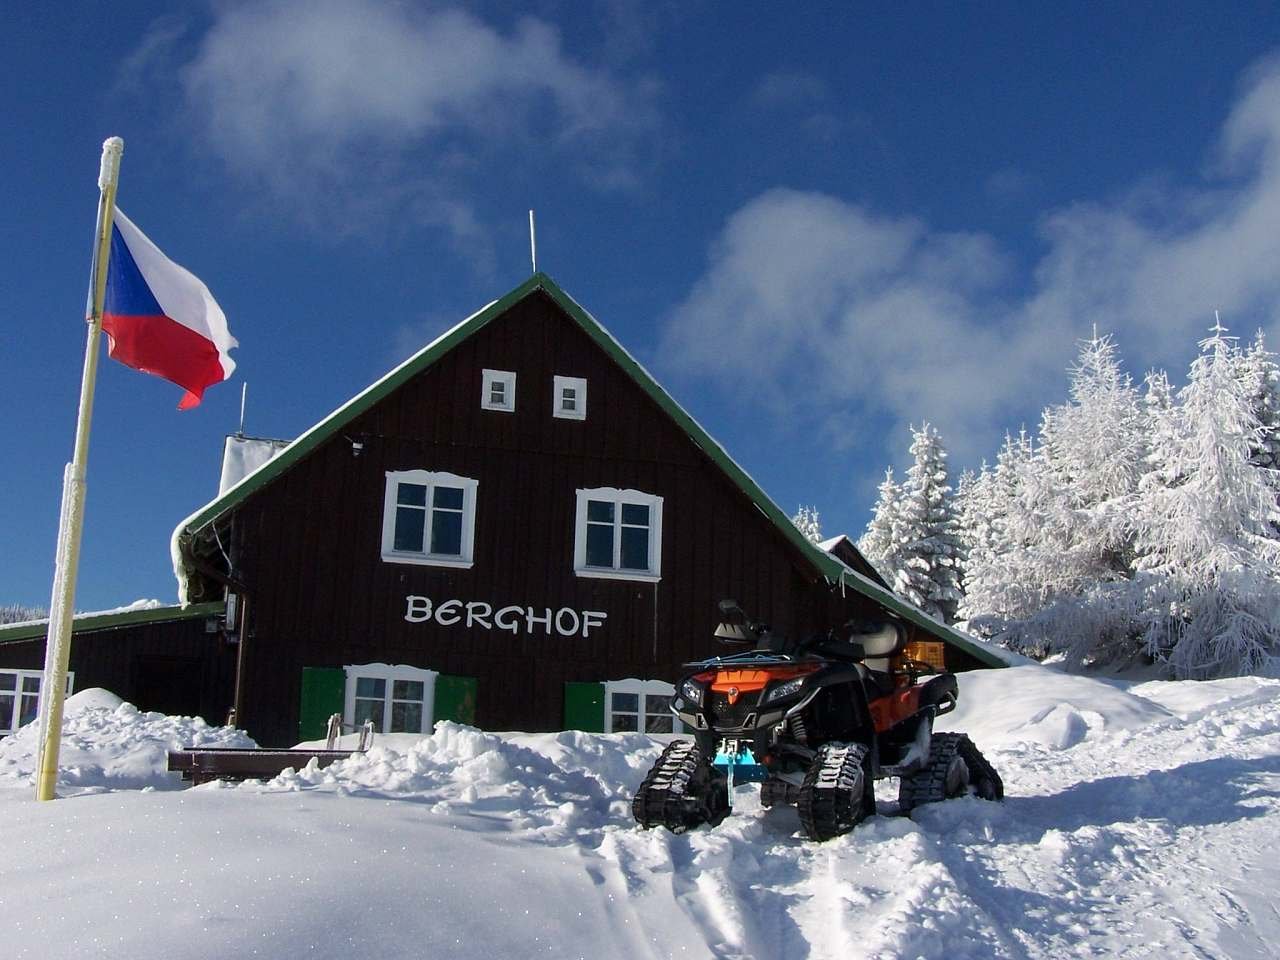 Berghof mountain hut